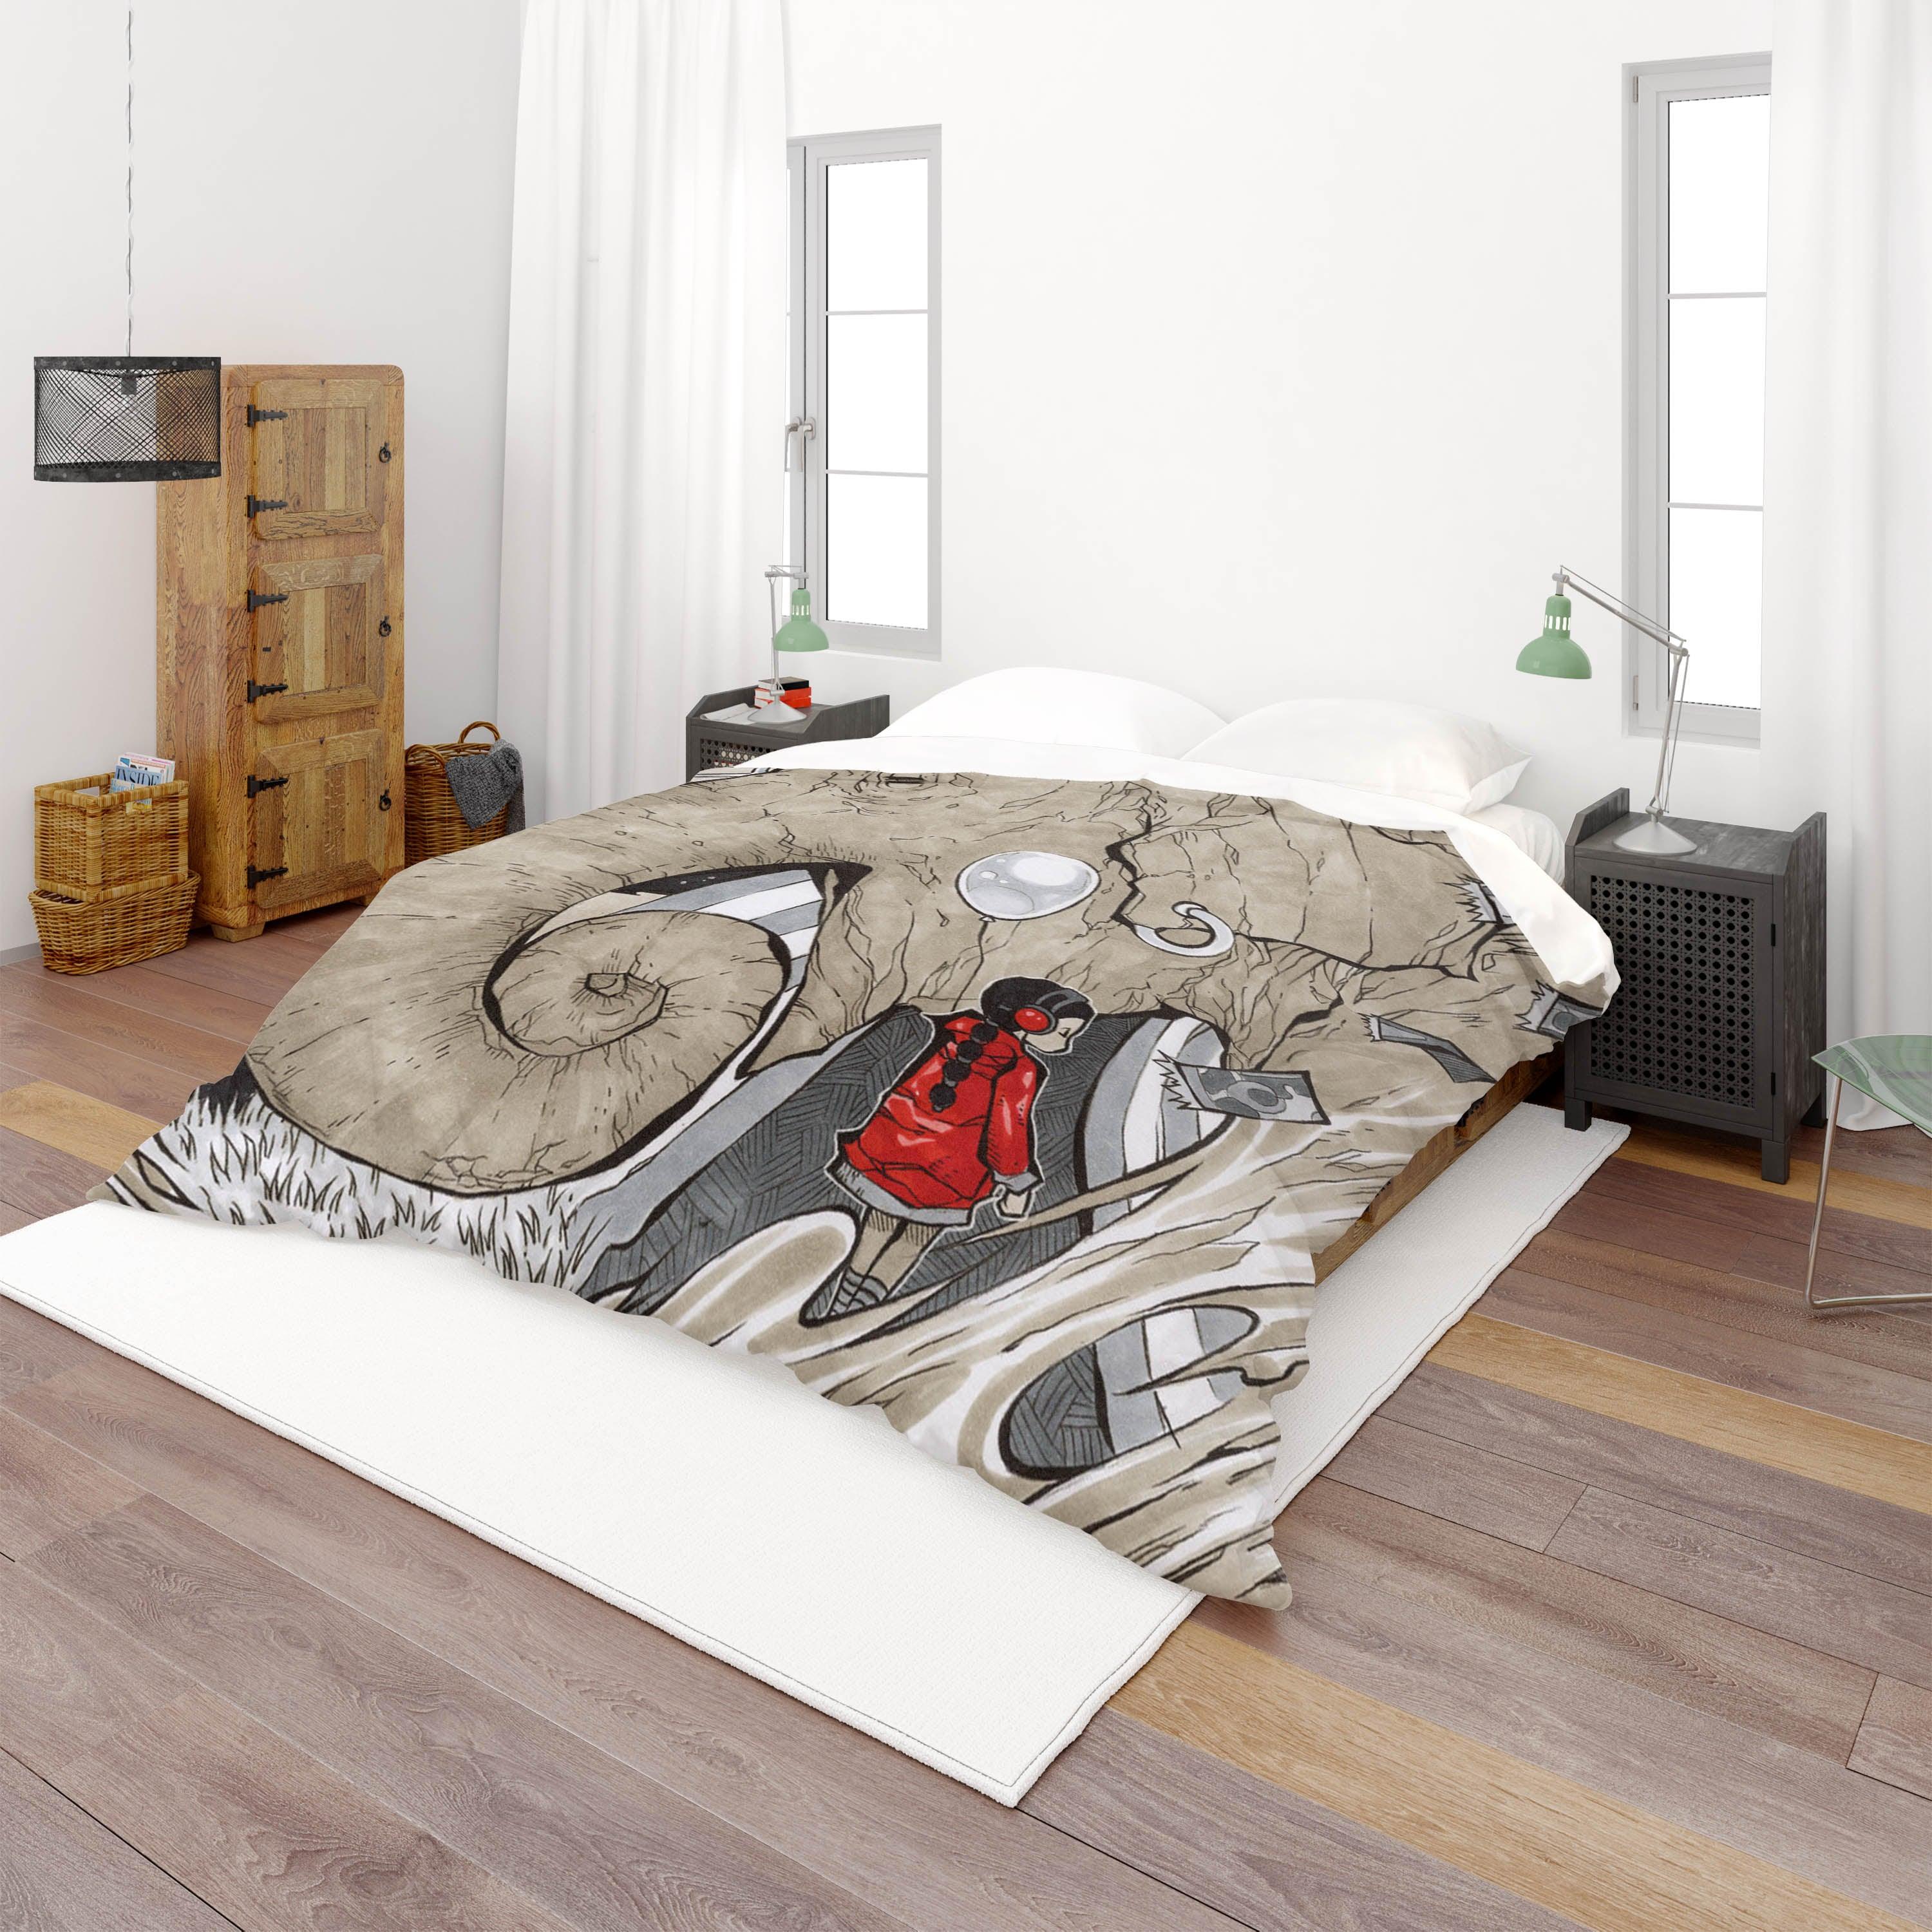 3D Cartoon Elephant  Quilt Cover Set Bedding Set Pillowcases  39- Jess Art Decoration